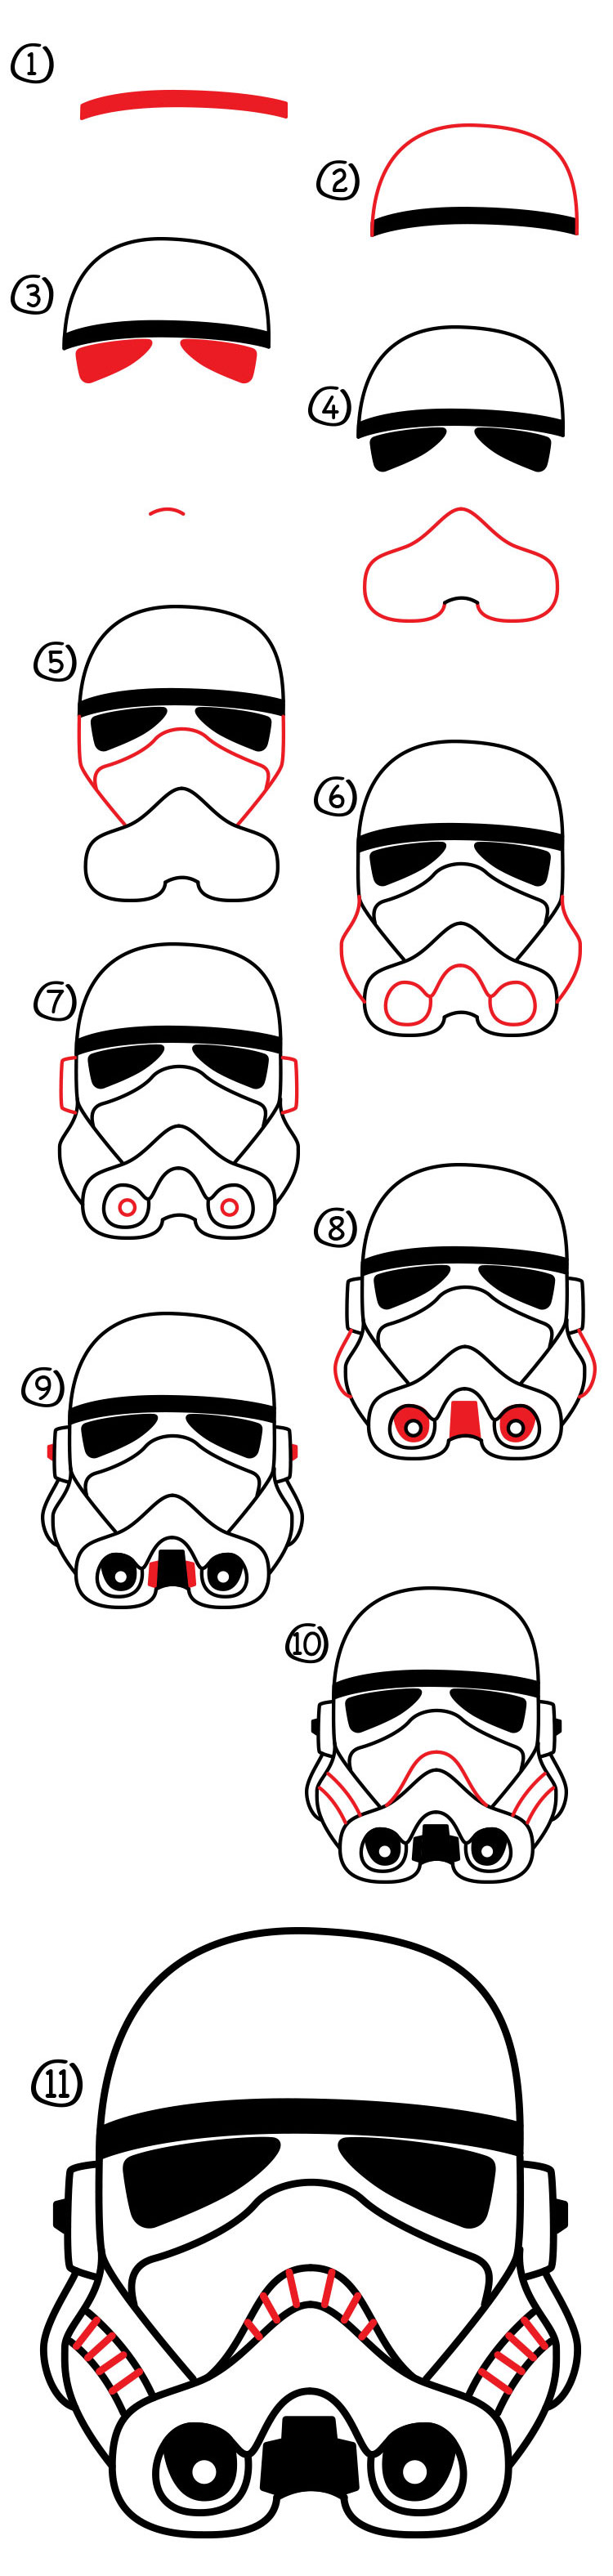 How To Draw A Stormtrooper Helmet Art For Kids Hub